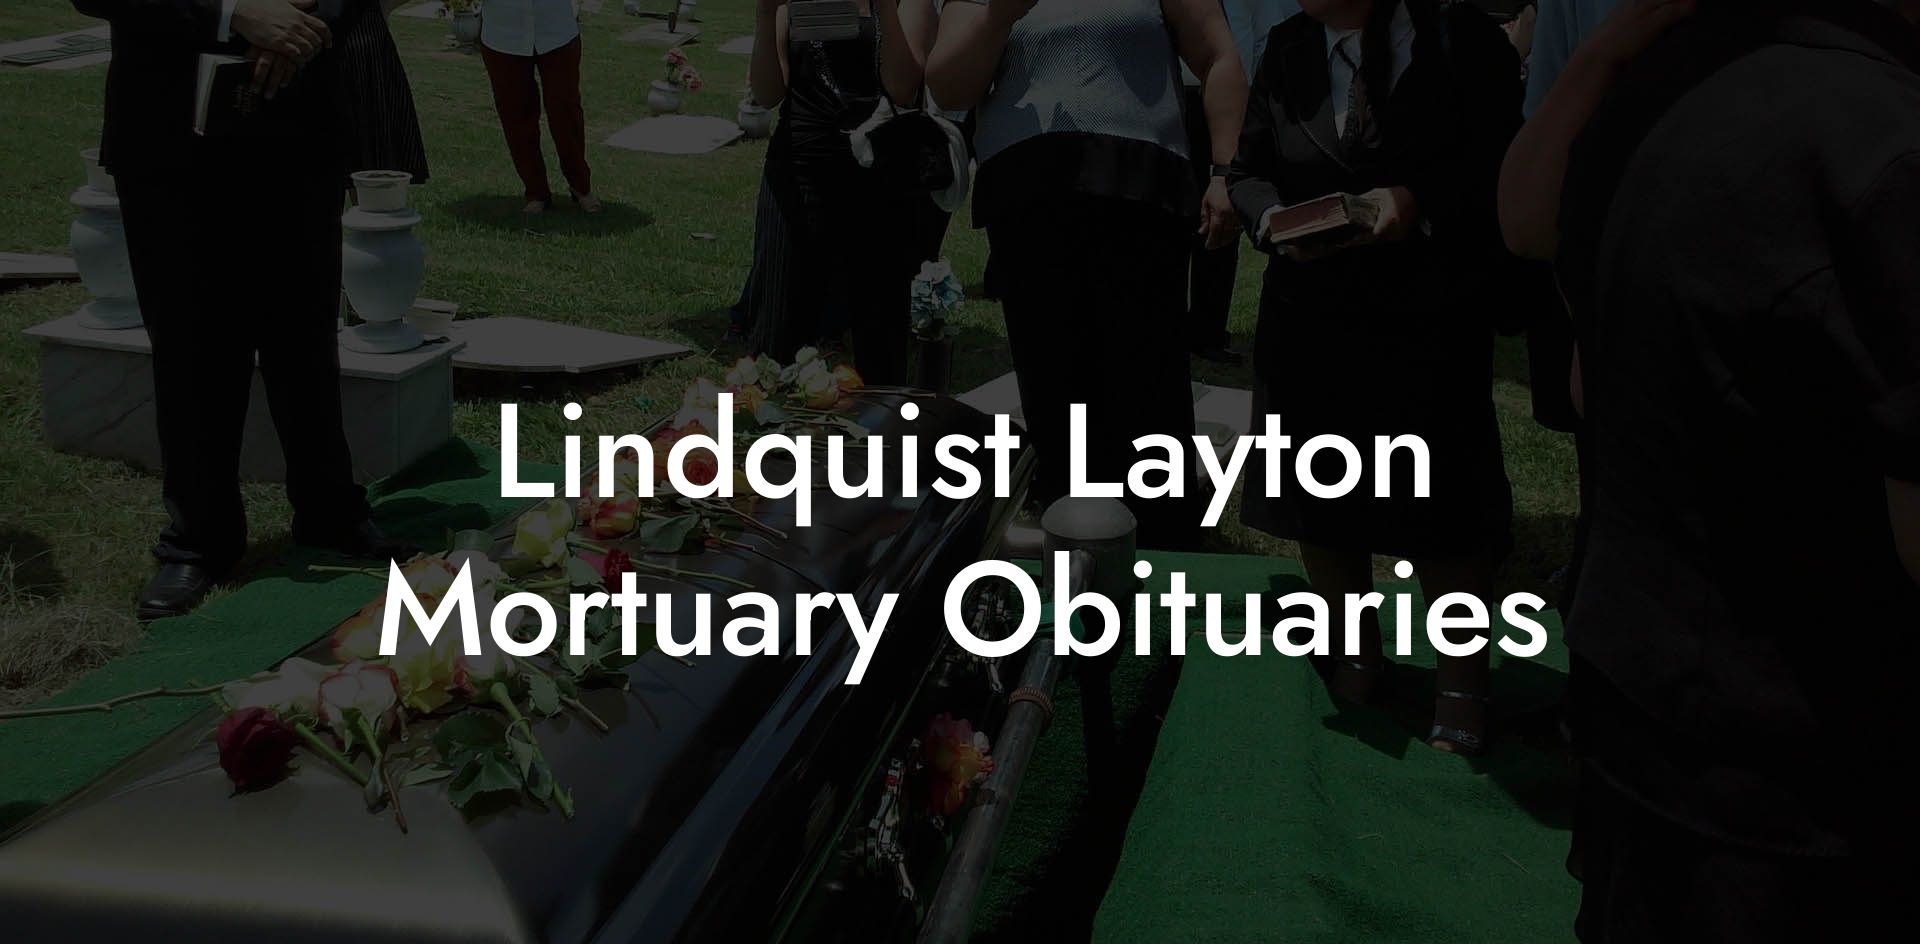 Lindquist Layton Mortuary Obituaries